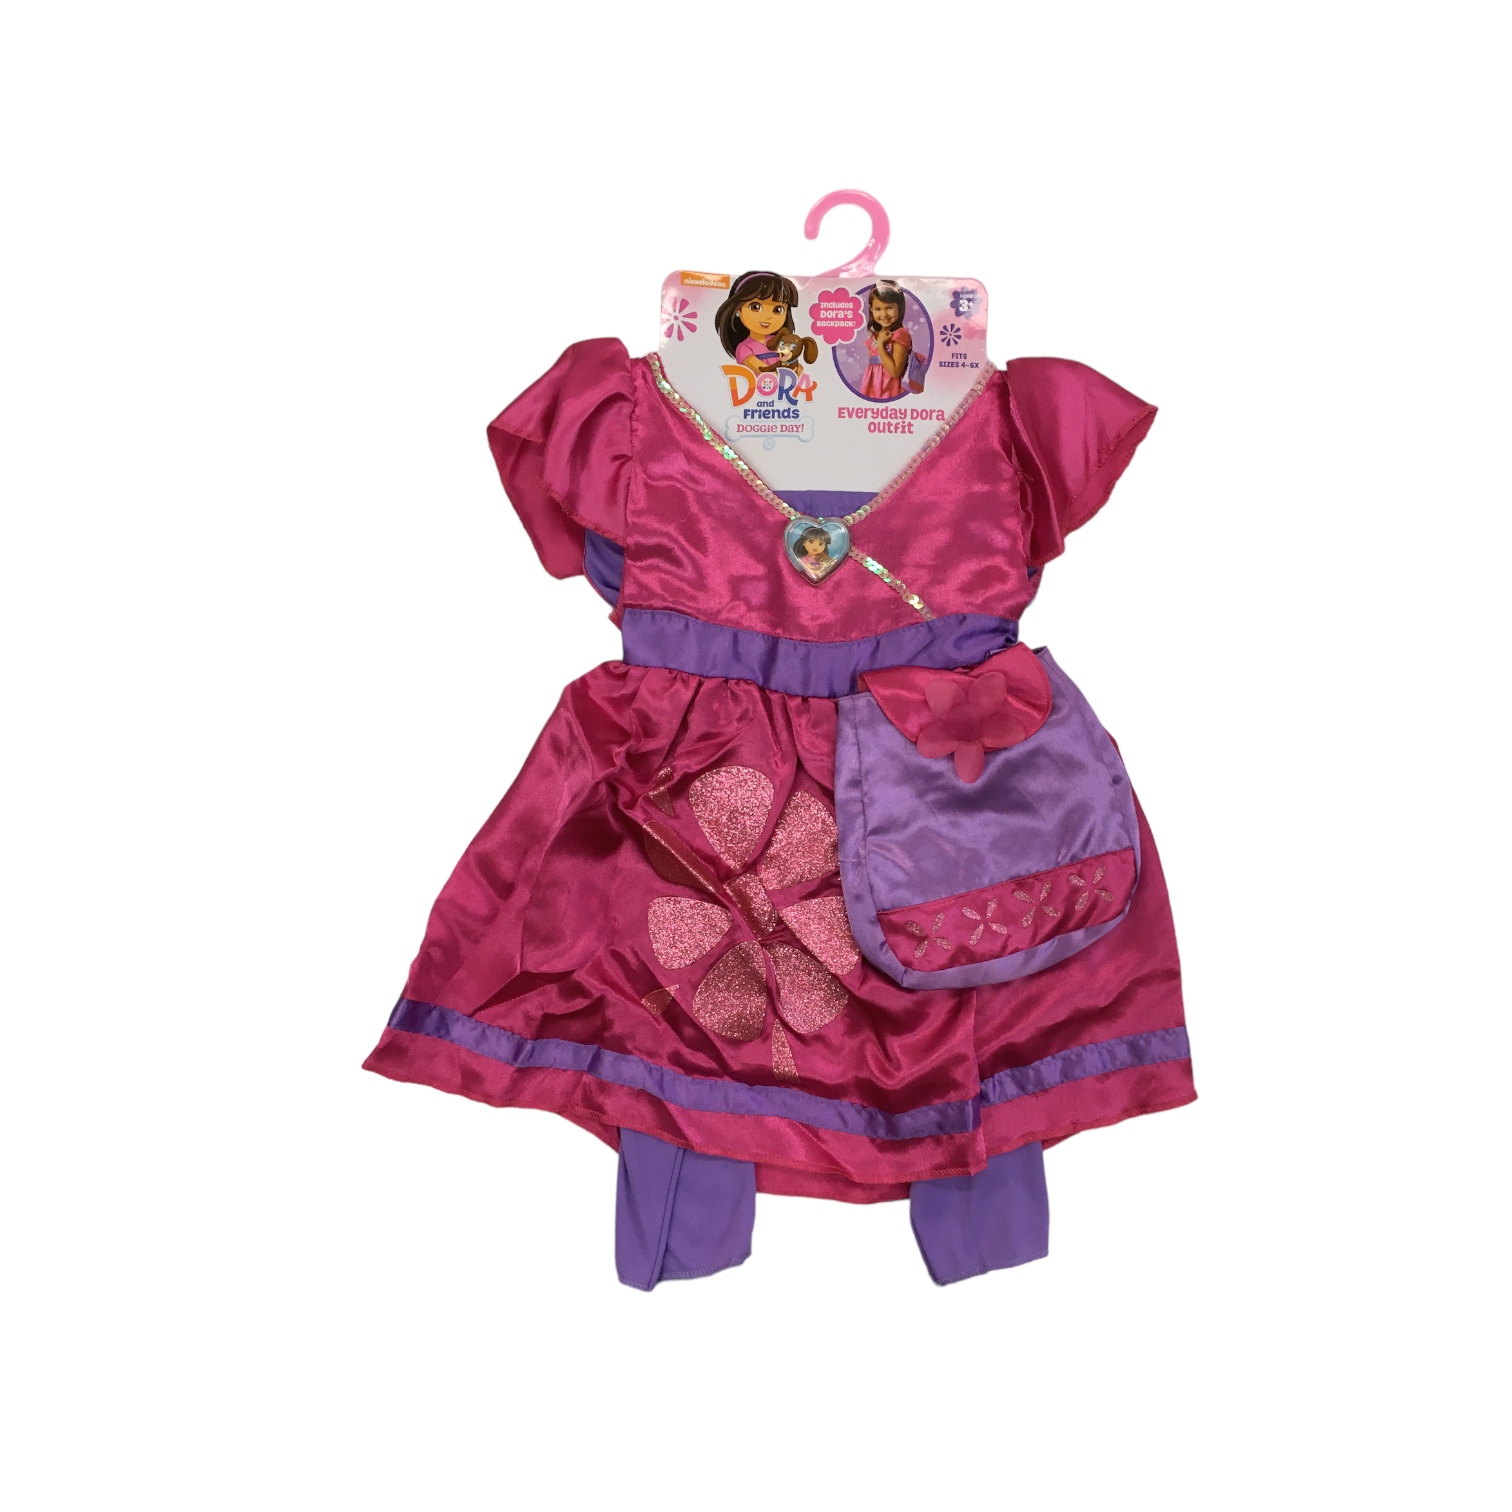 Sandee Rain Boutique - LuLaRoe Disney Carly Dress LuLaRoe Dresses